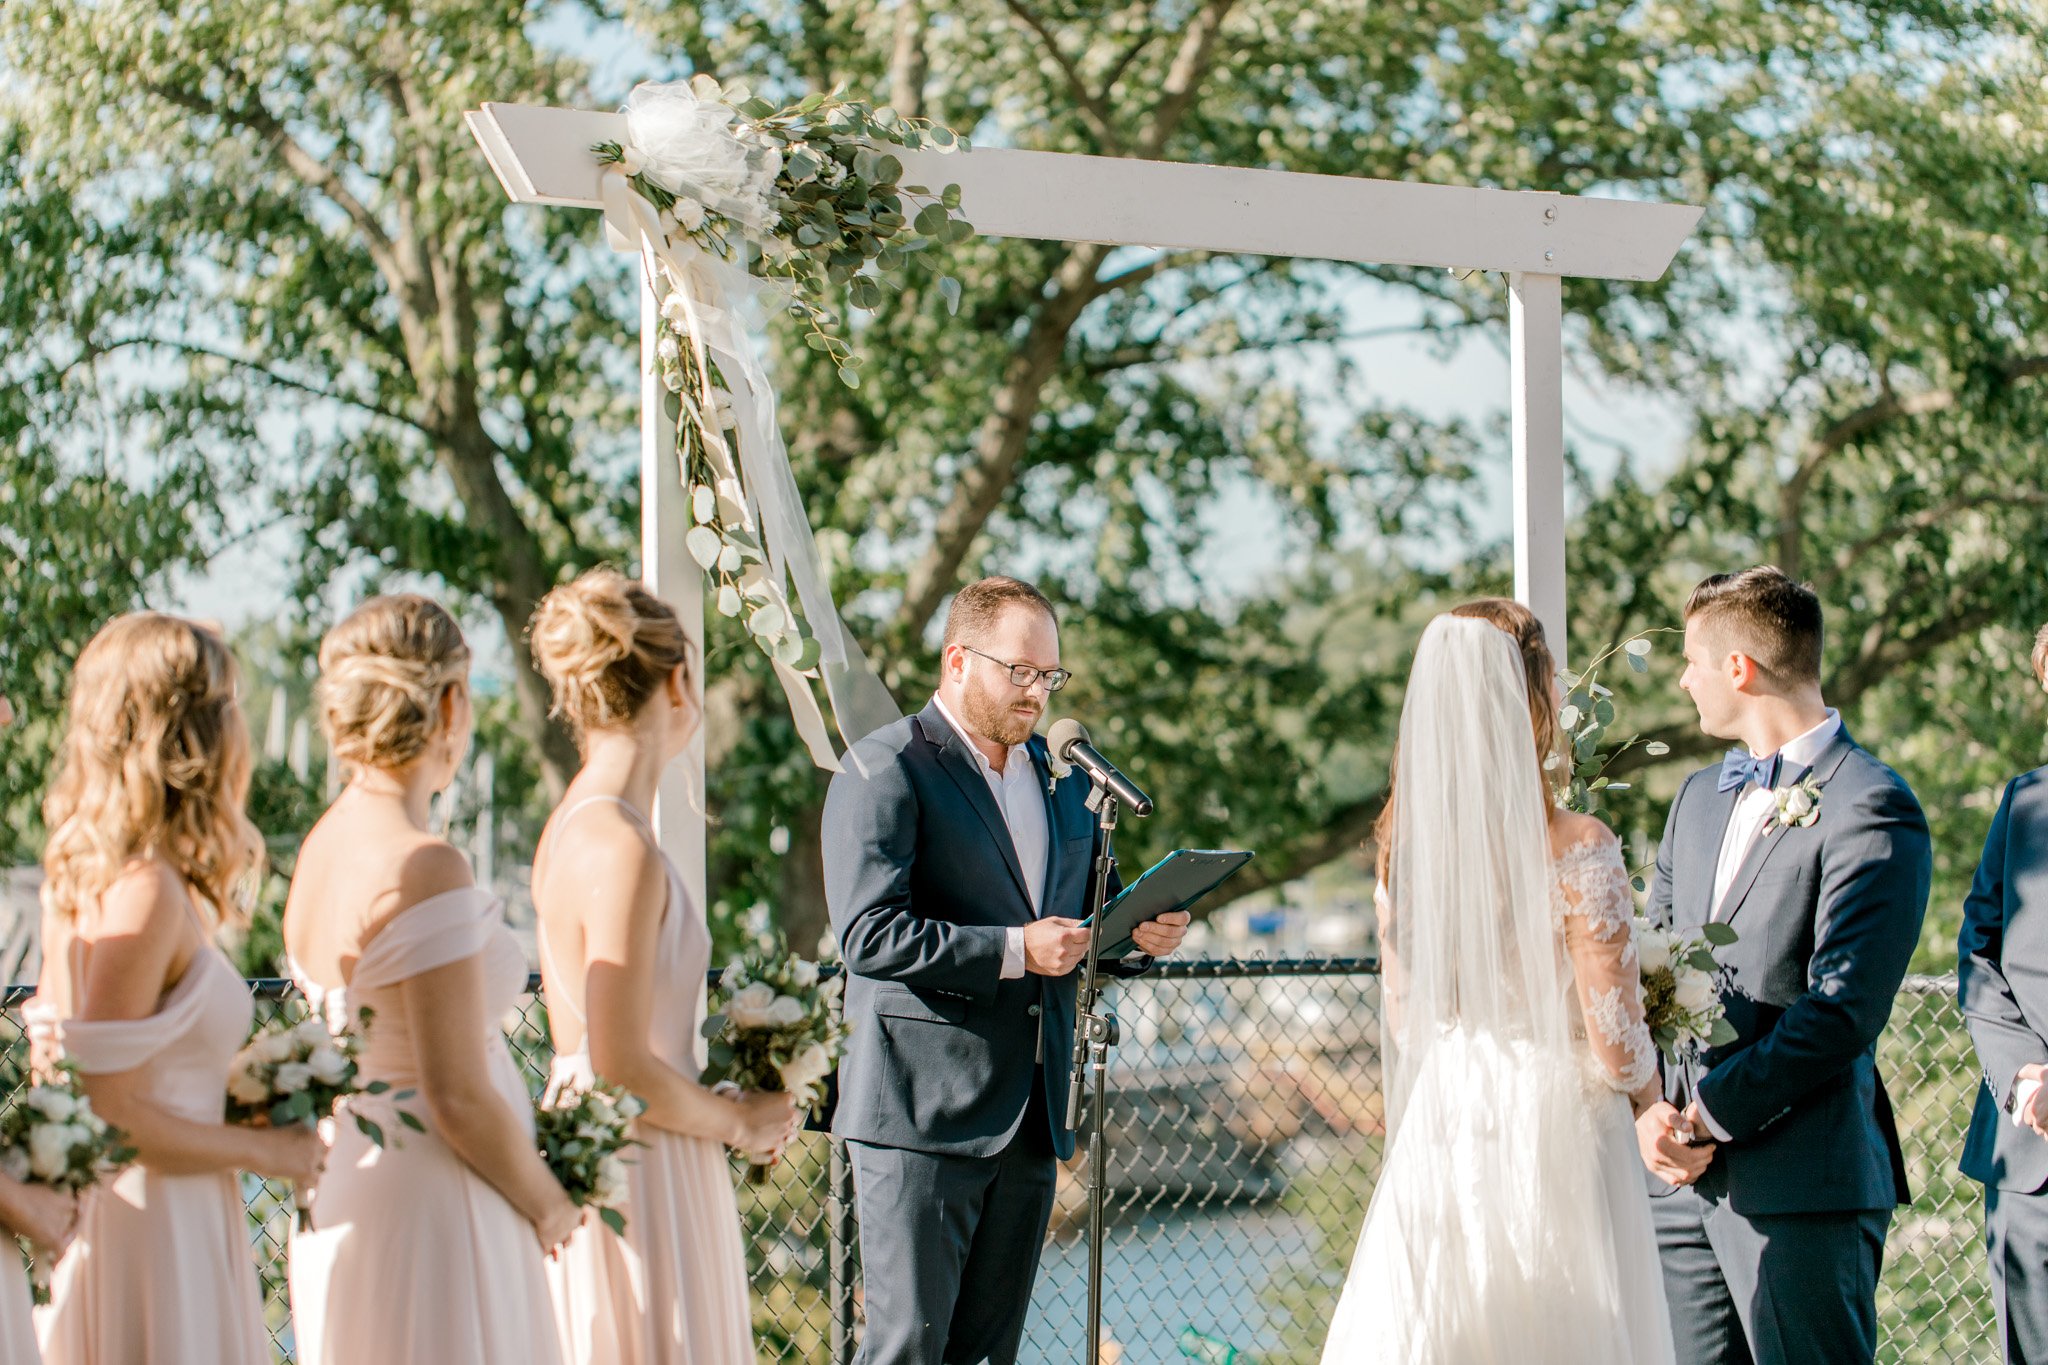 St Joseph, Michigan Wedding | West Michigan Wedding Photographer | Outdoor Michigan Wedding